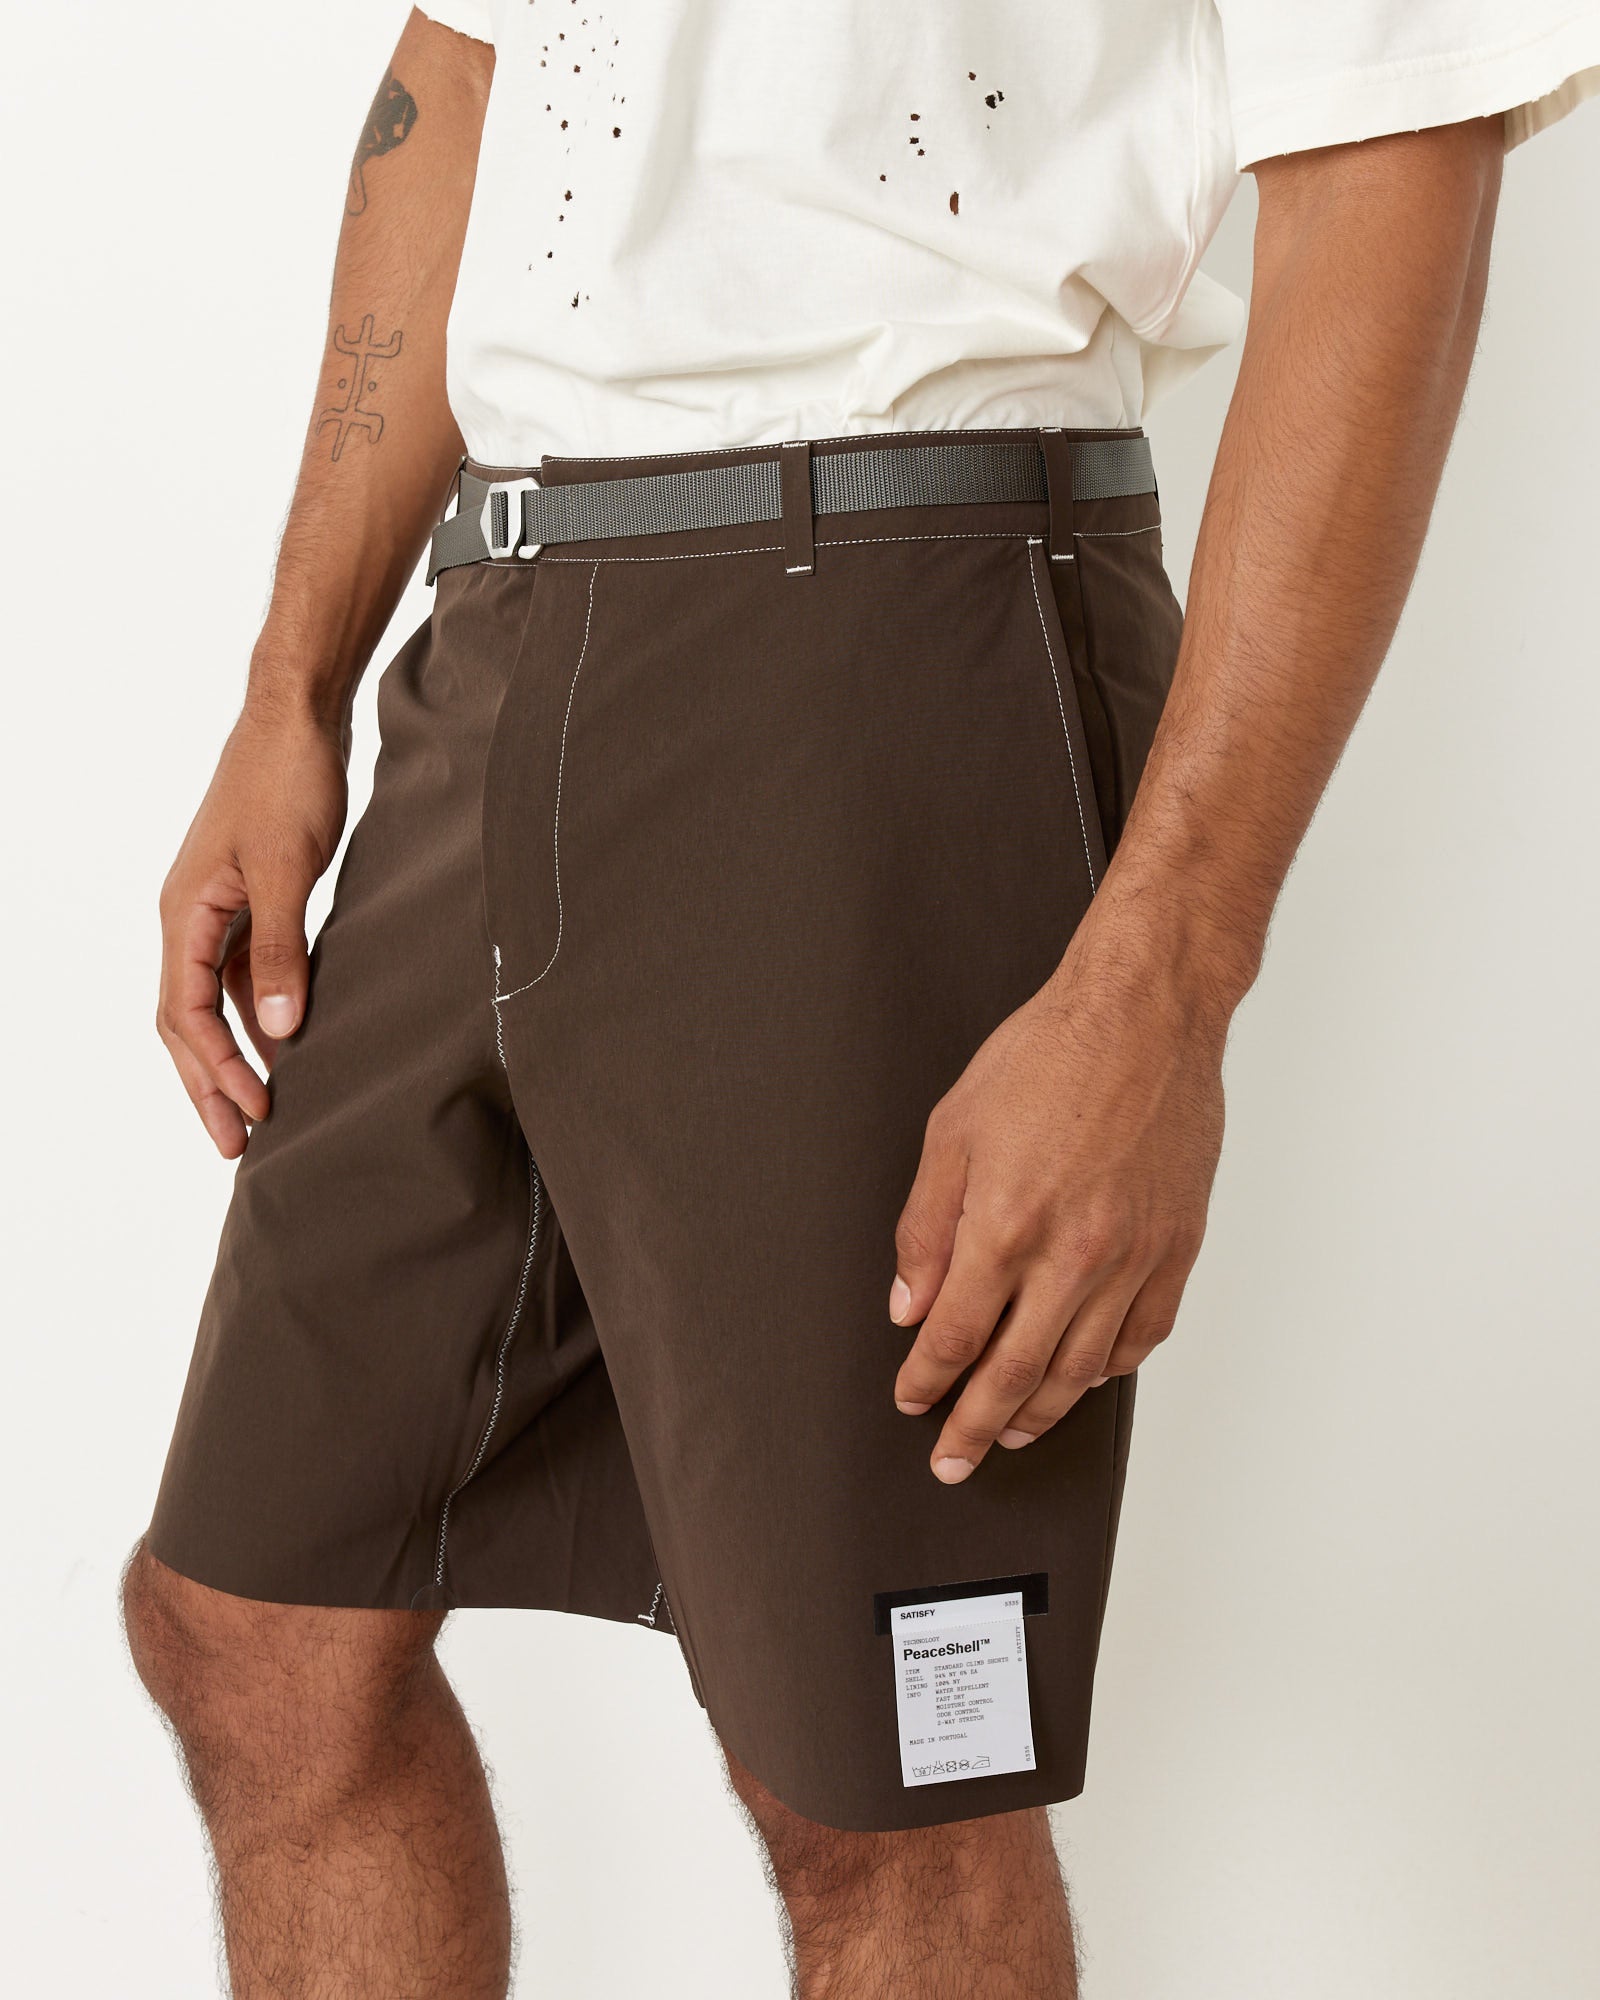 PeaceShell Standard Climb Shorts in Brown